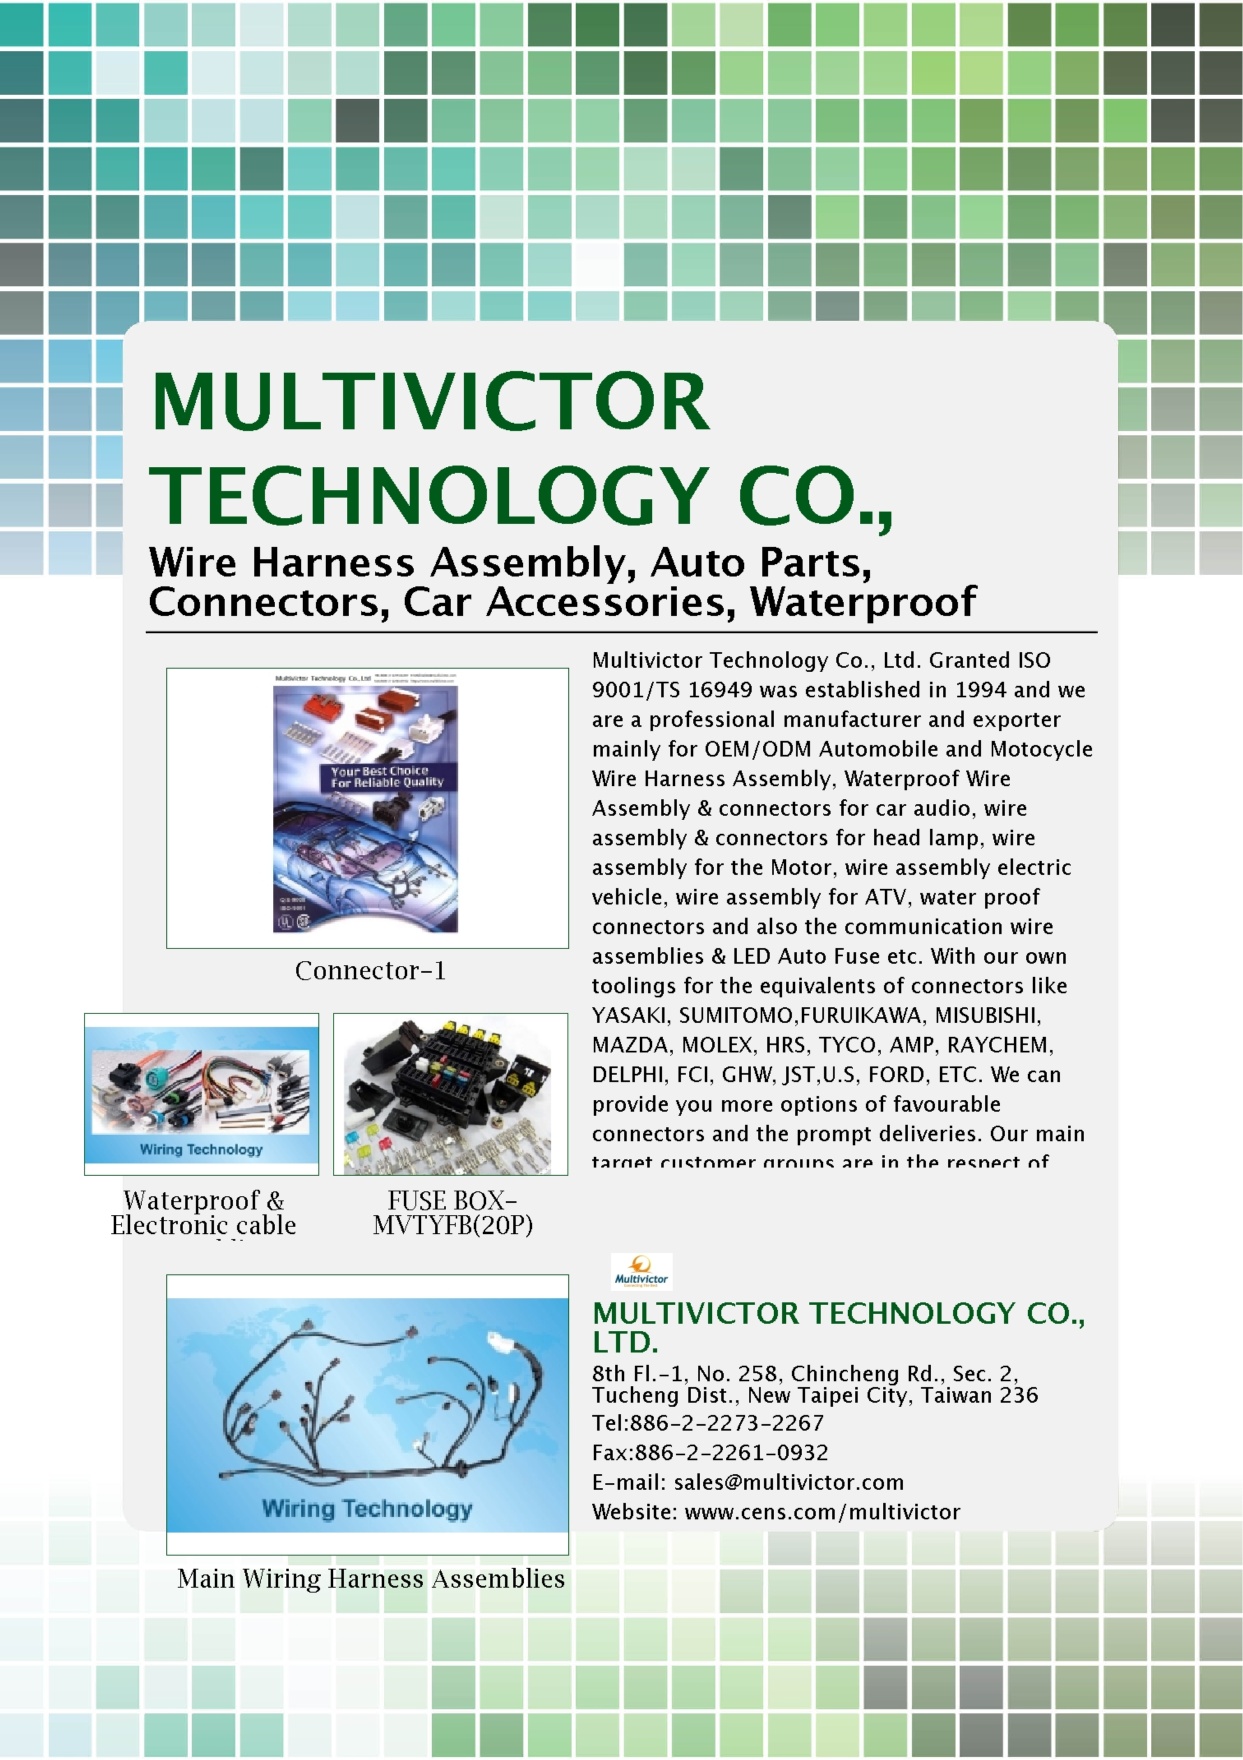 MULTIVICTOR TECHNOLOGY CO., LTD.